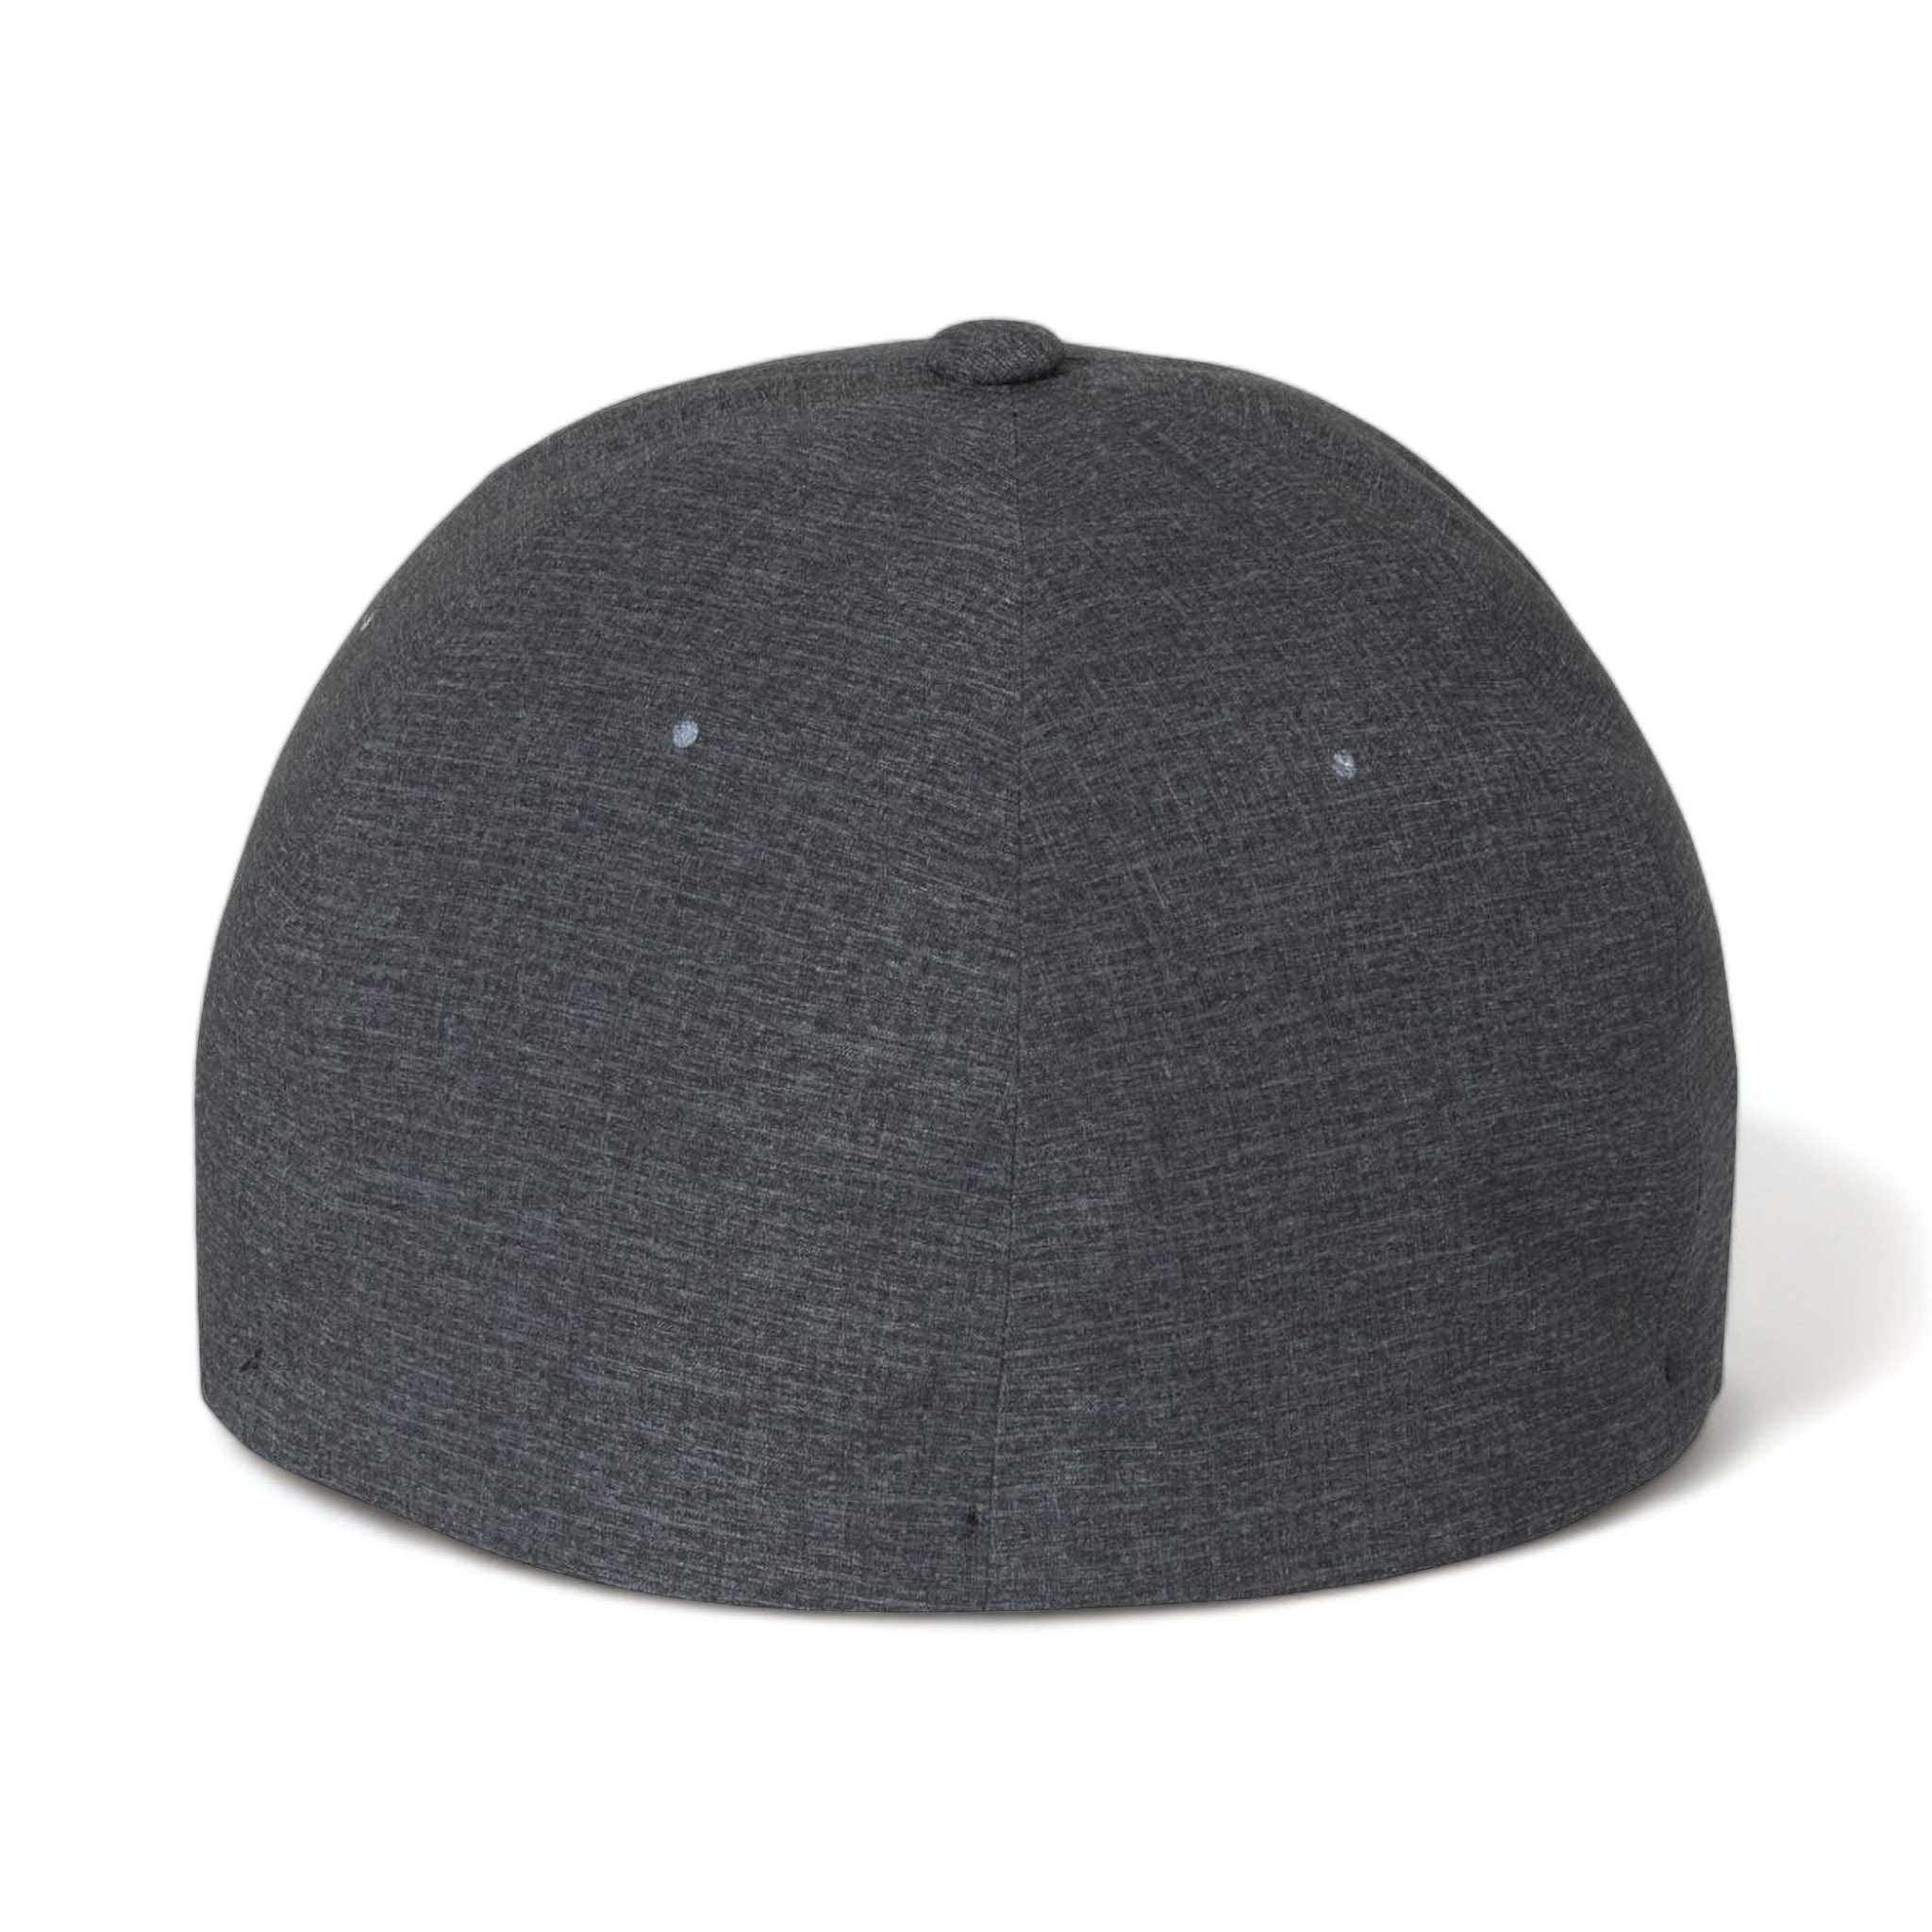 Back view of Flexfit 180 custom hat in mélange charcoal